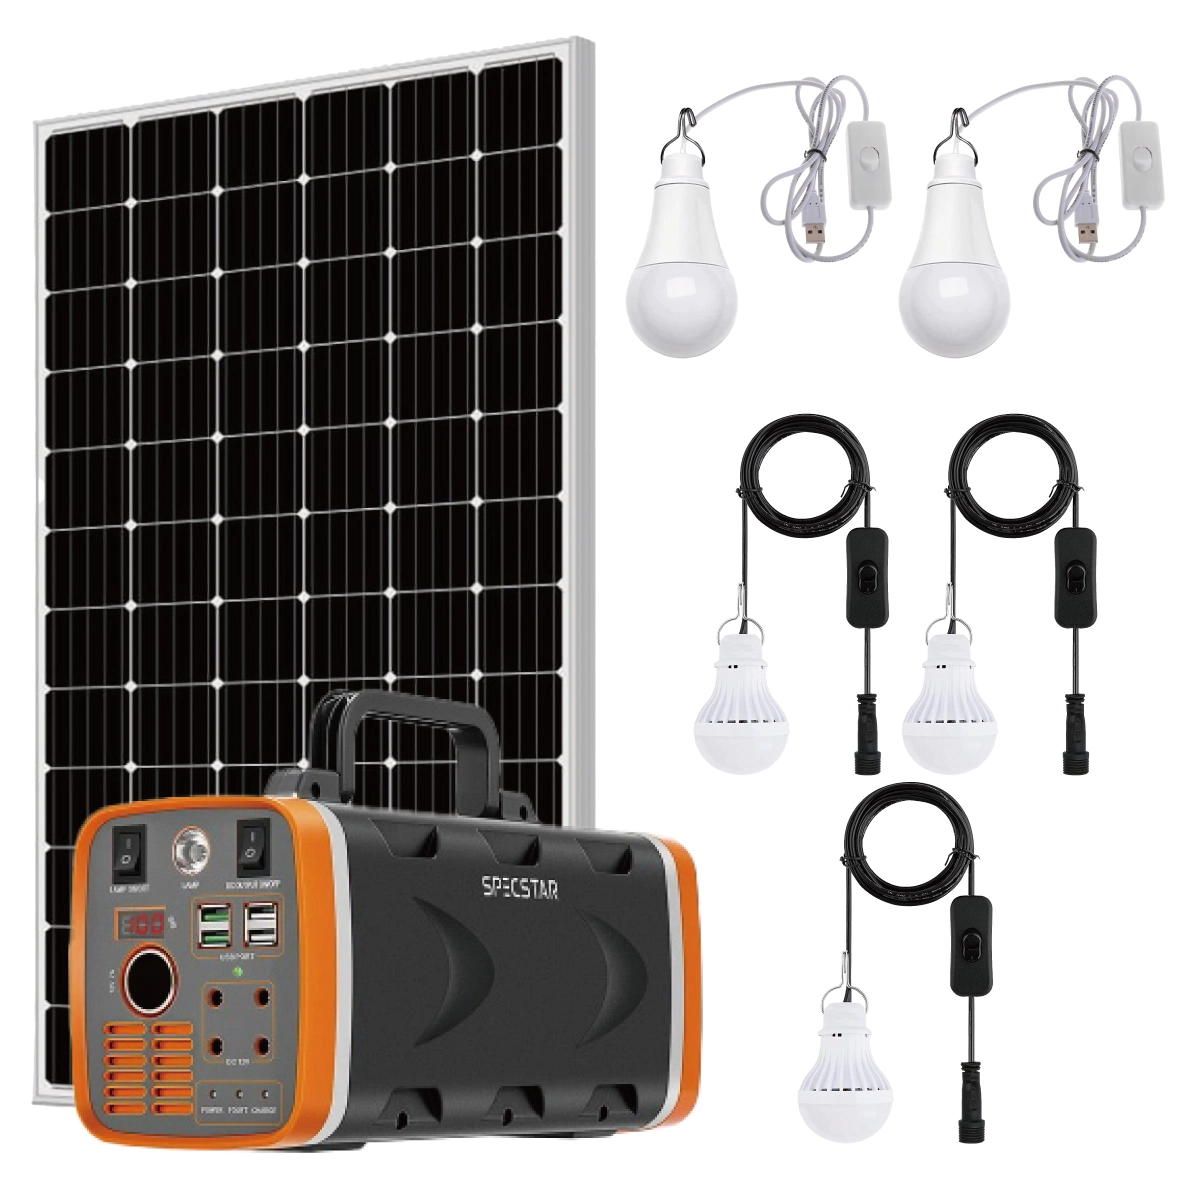 inl psg 002 portable solar power system